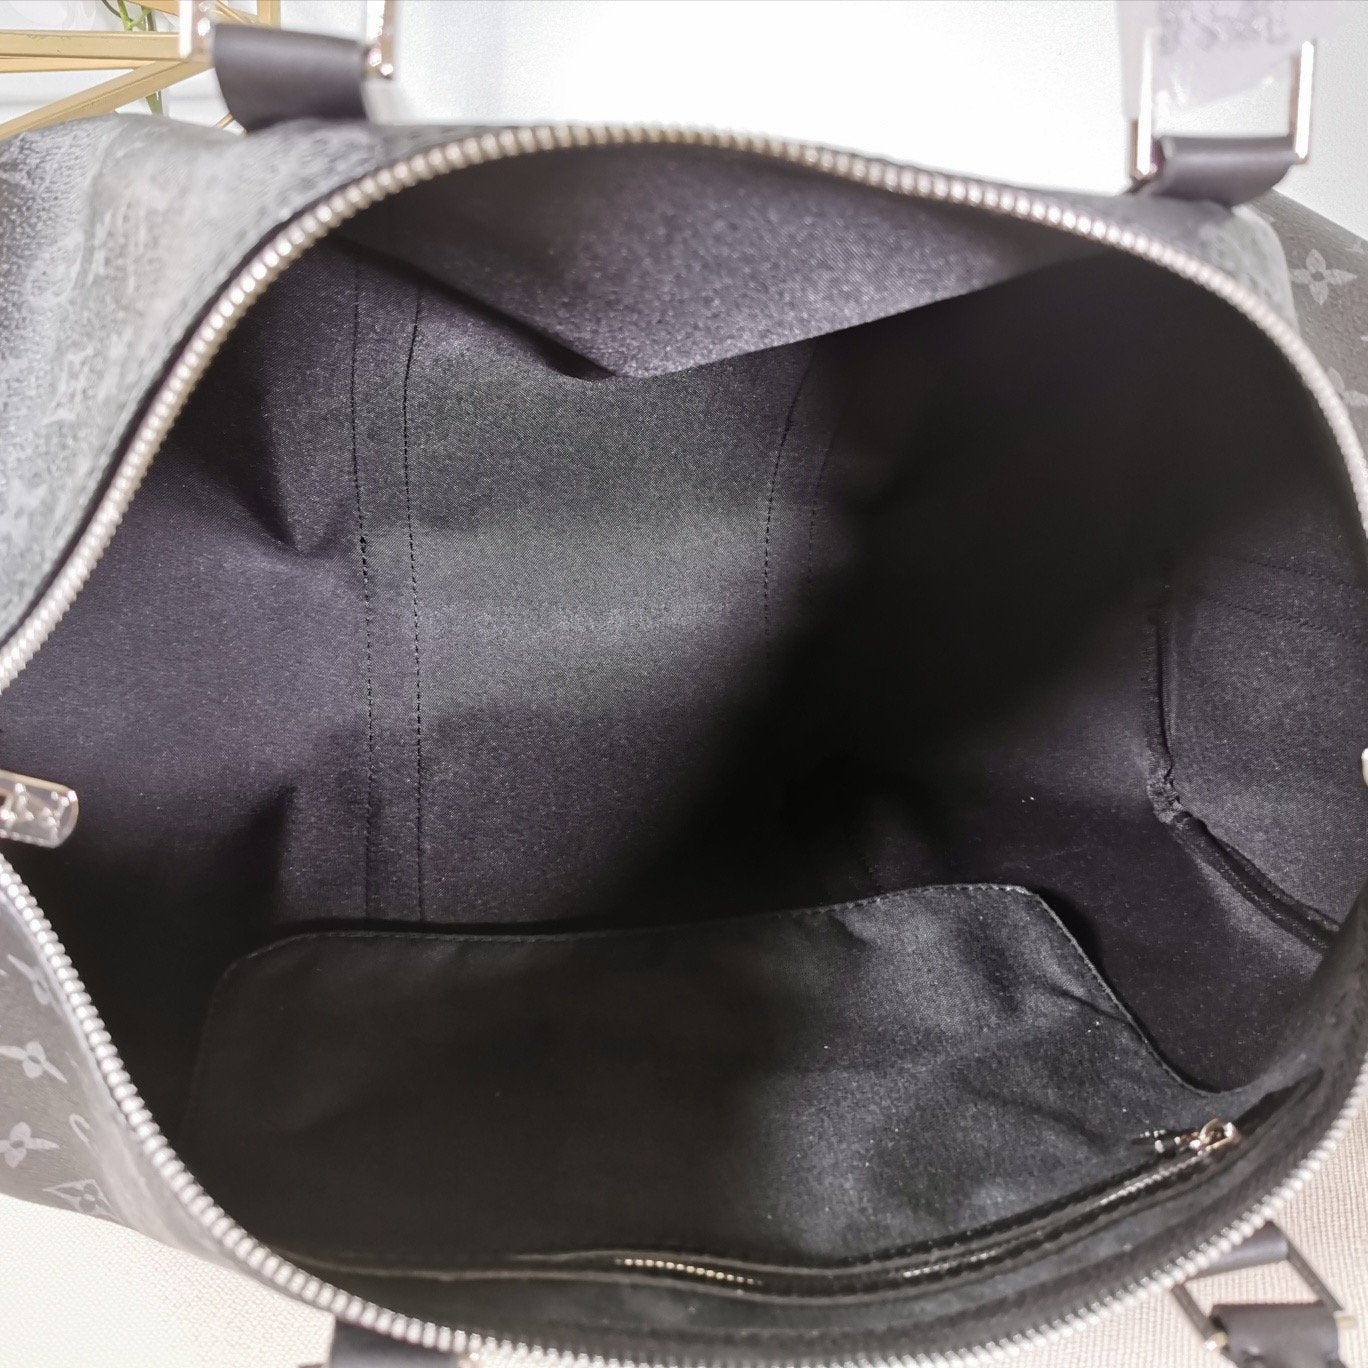 BL - High Quality Bags LUV 262